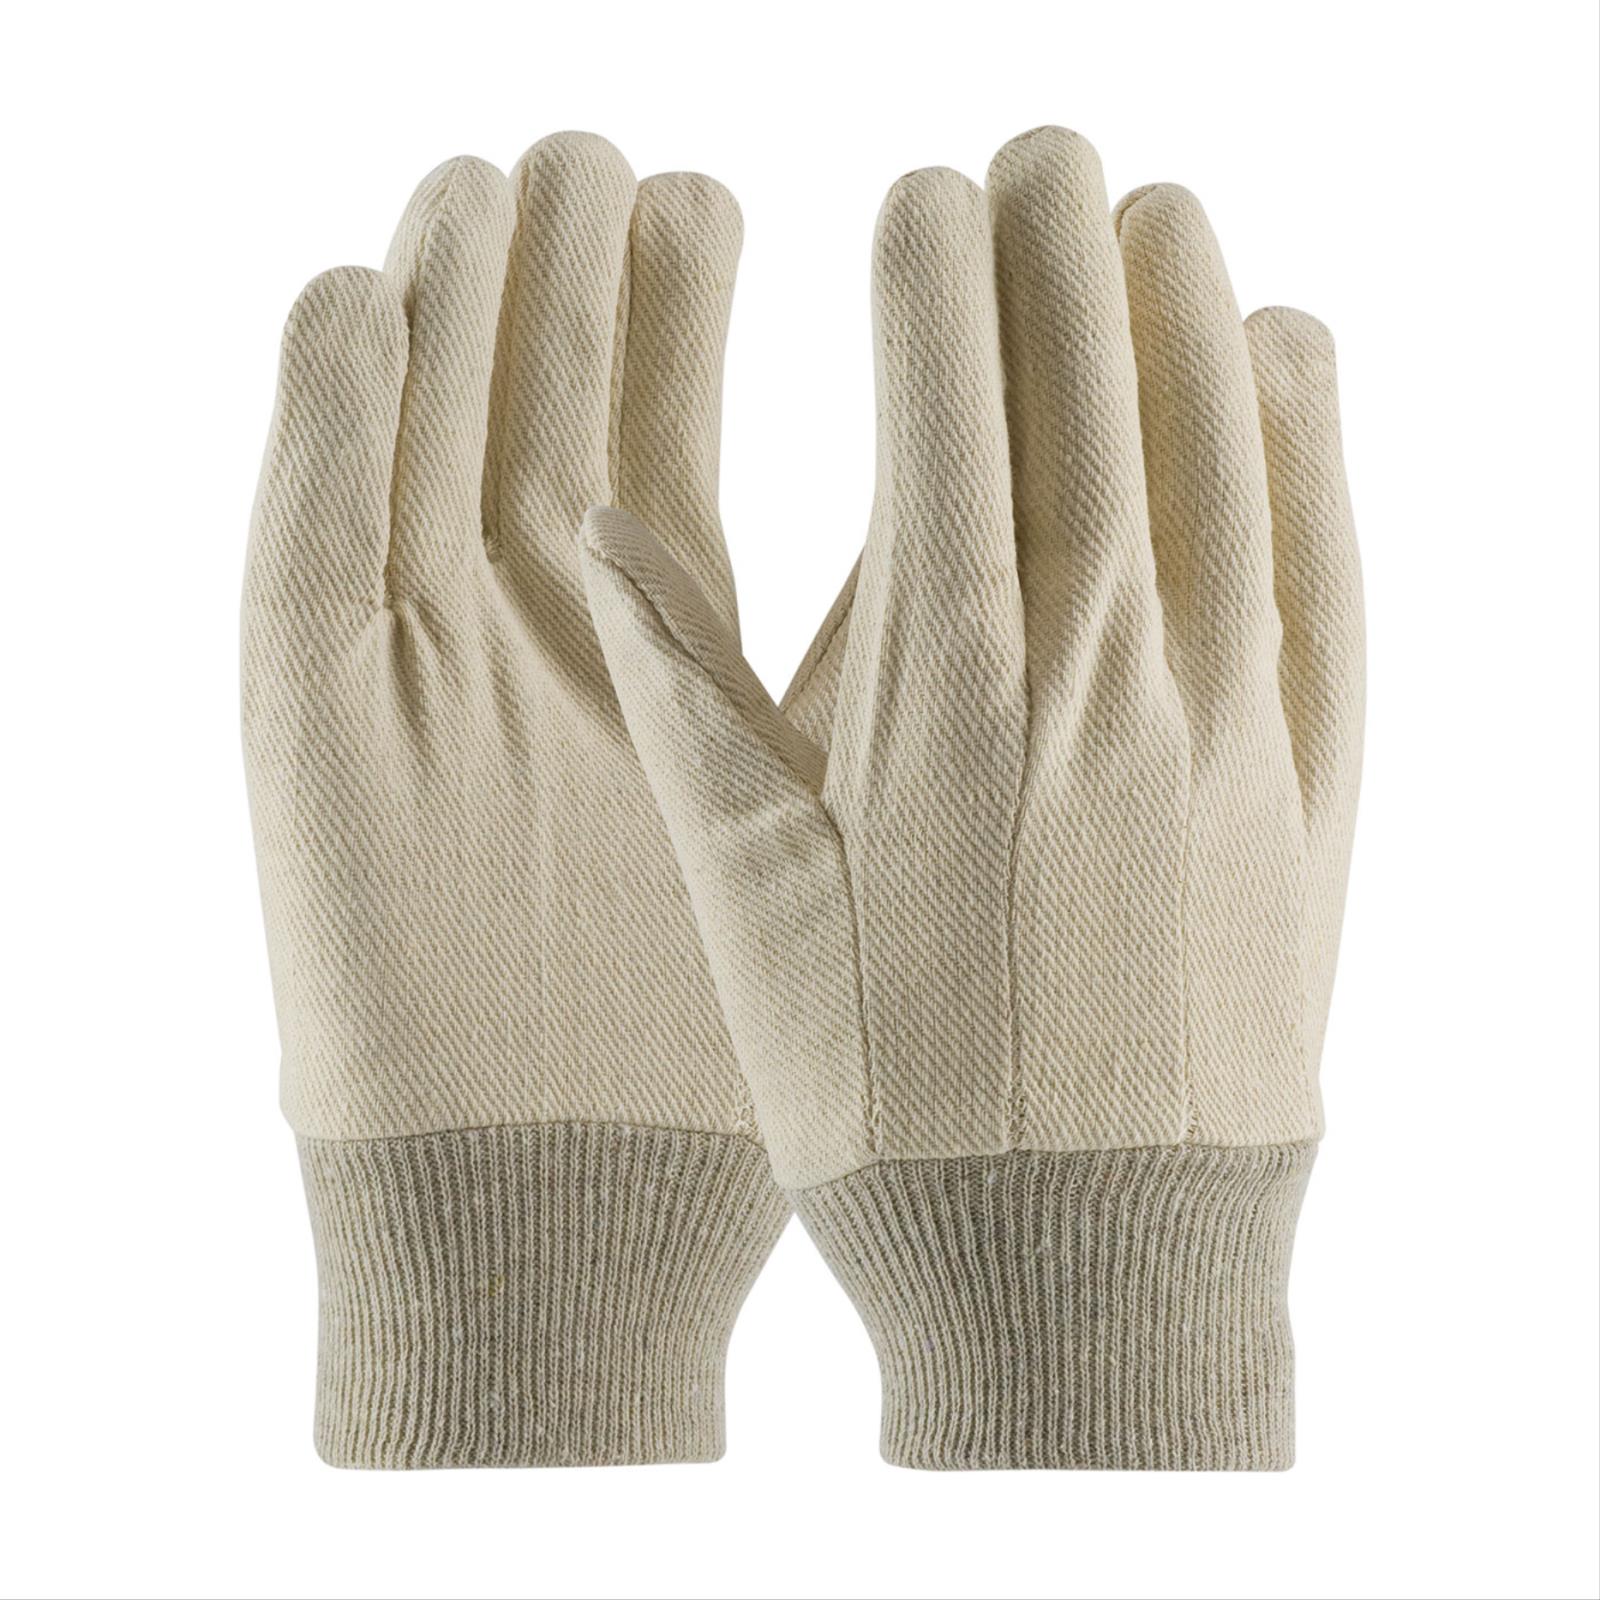 Premium Grade Cotton Canvas, Single Palm Gloves